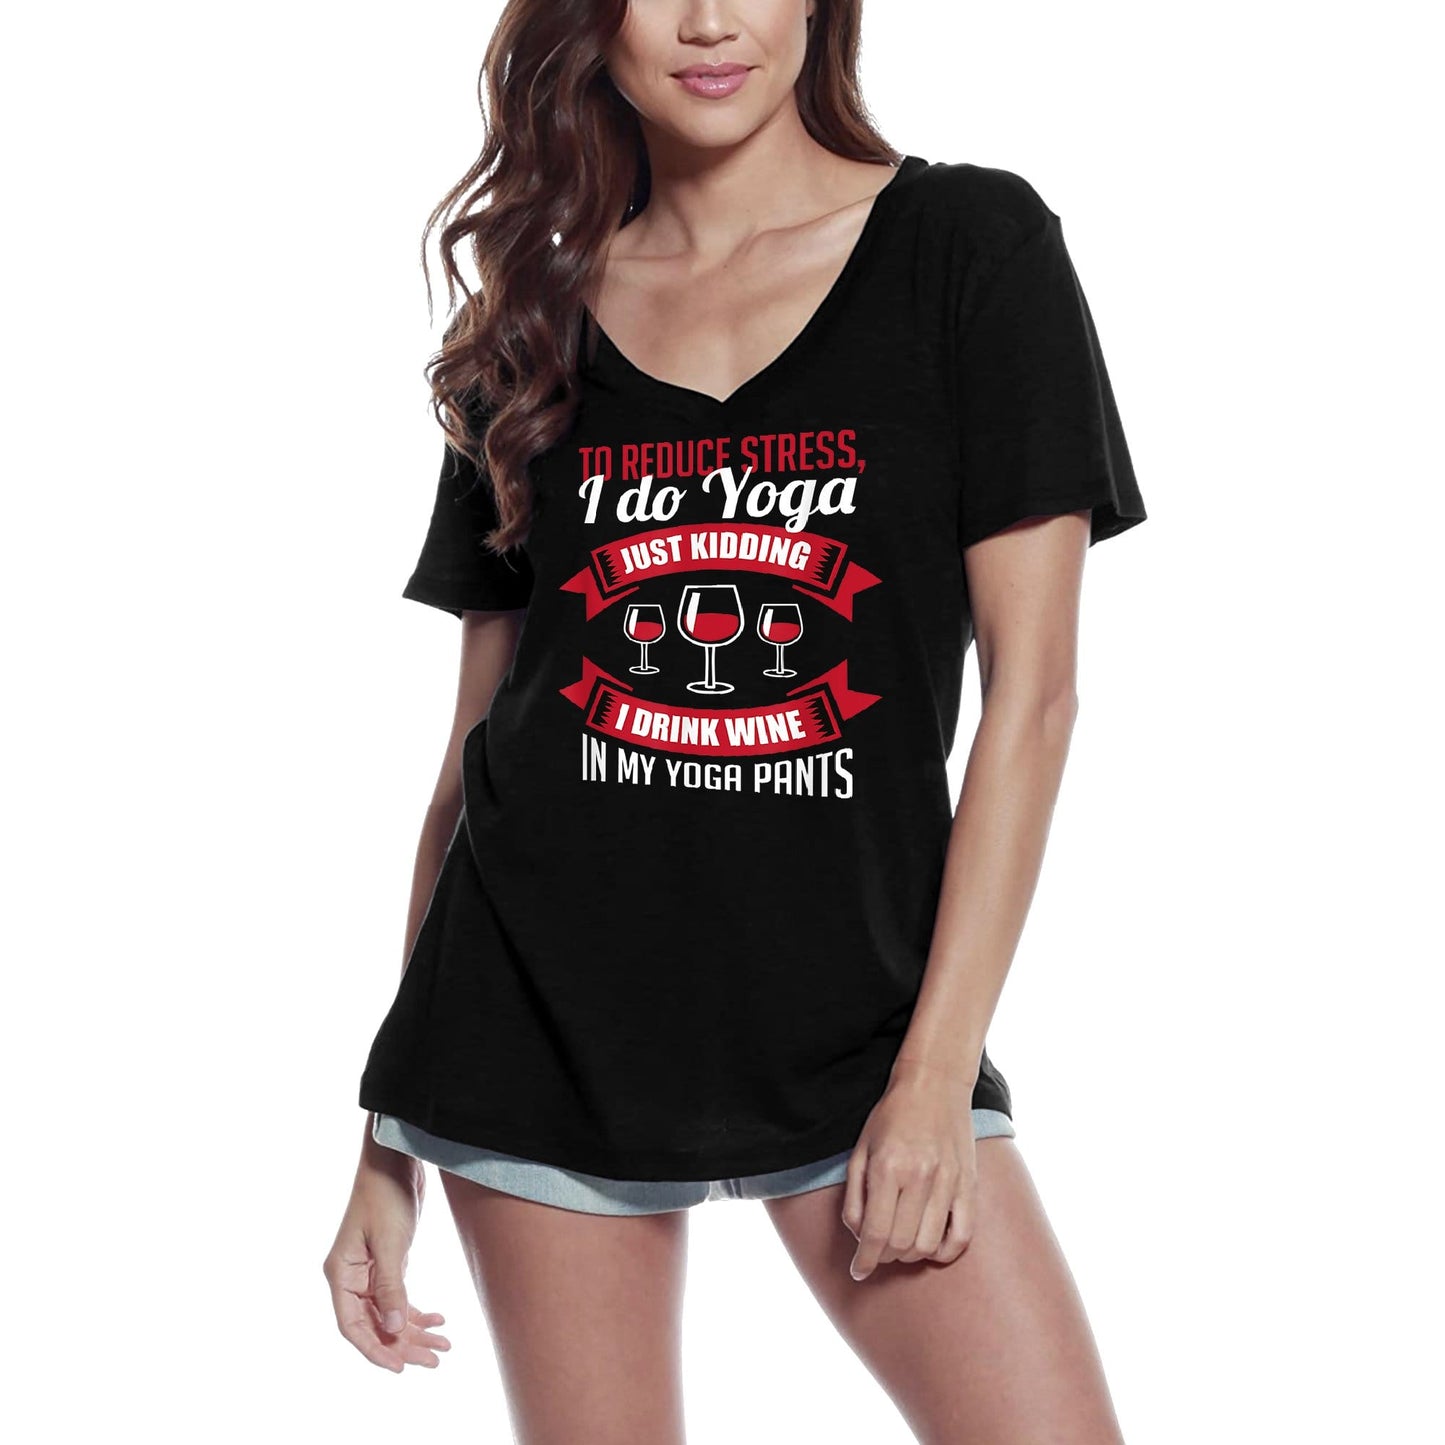 ULTRABASIC Women's V-Neck T-Shirt I Drink Wine In My Yoga Pants - Funny Humor Meditation Gift Tee Shirt